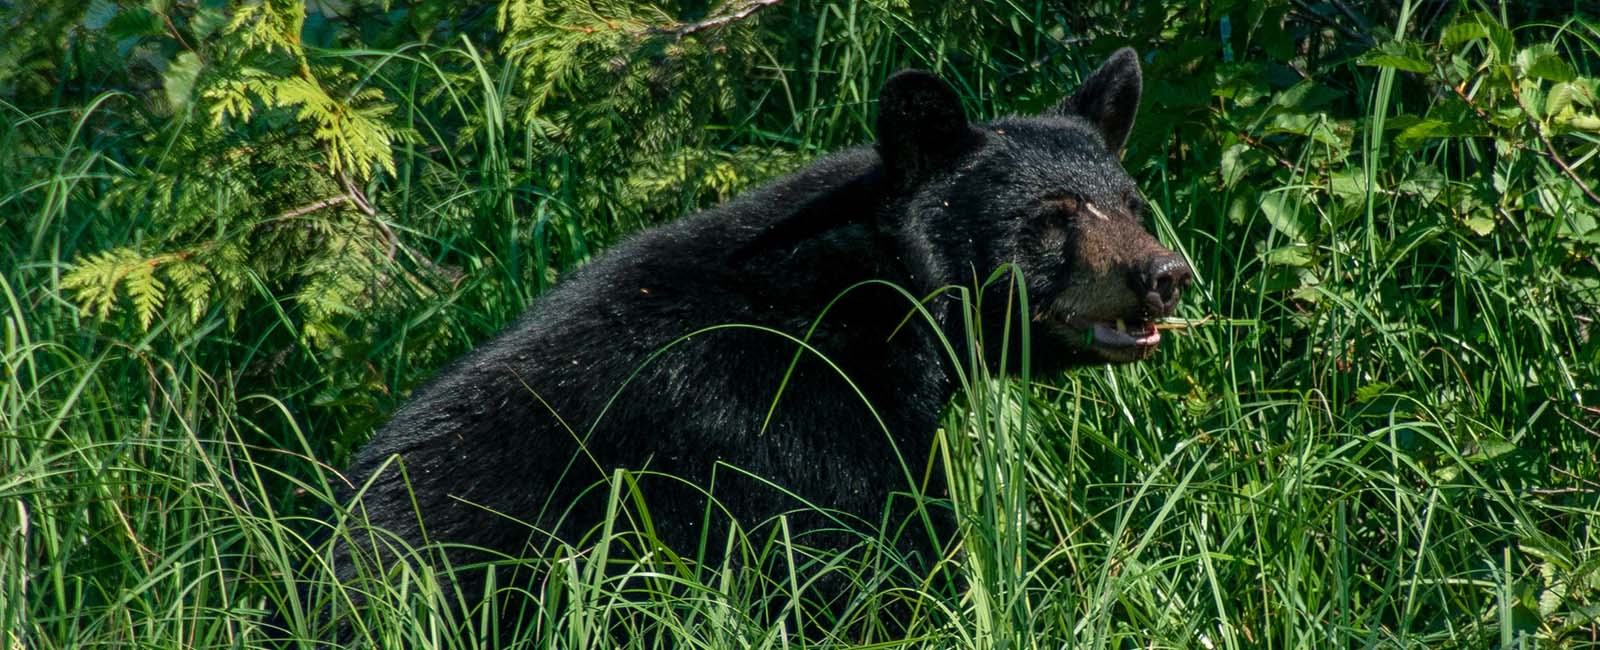 a black bear sits in long green grass